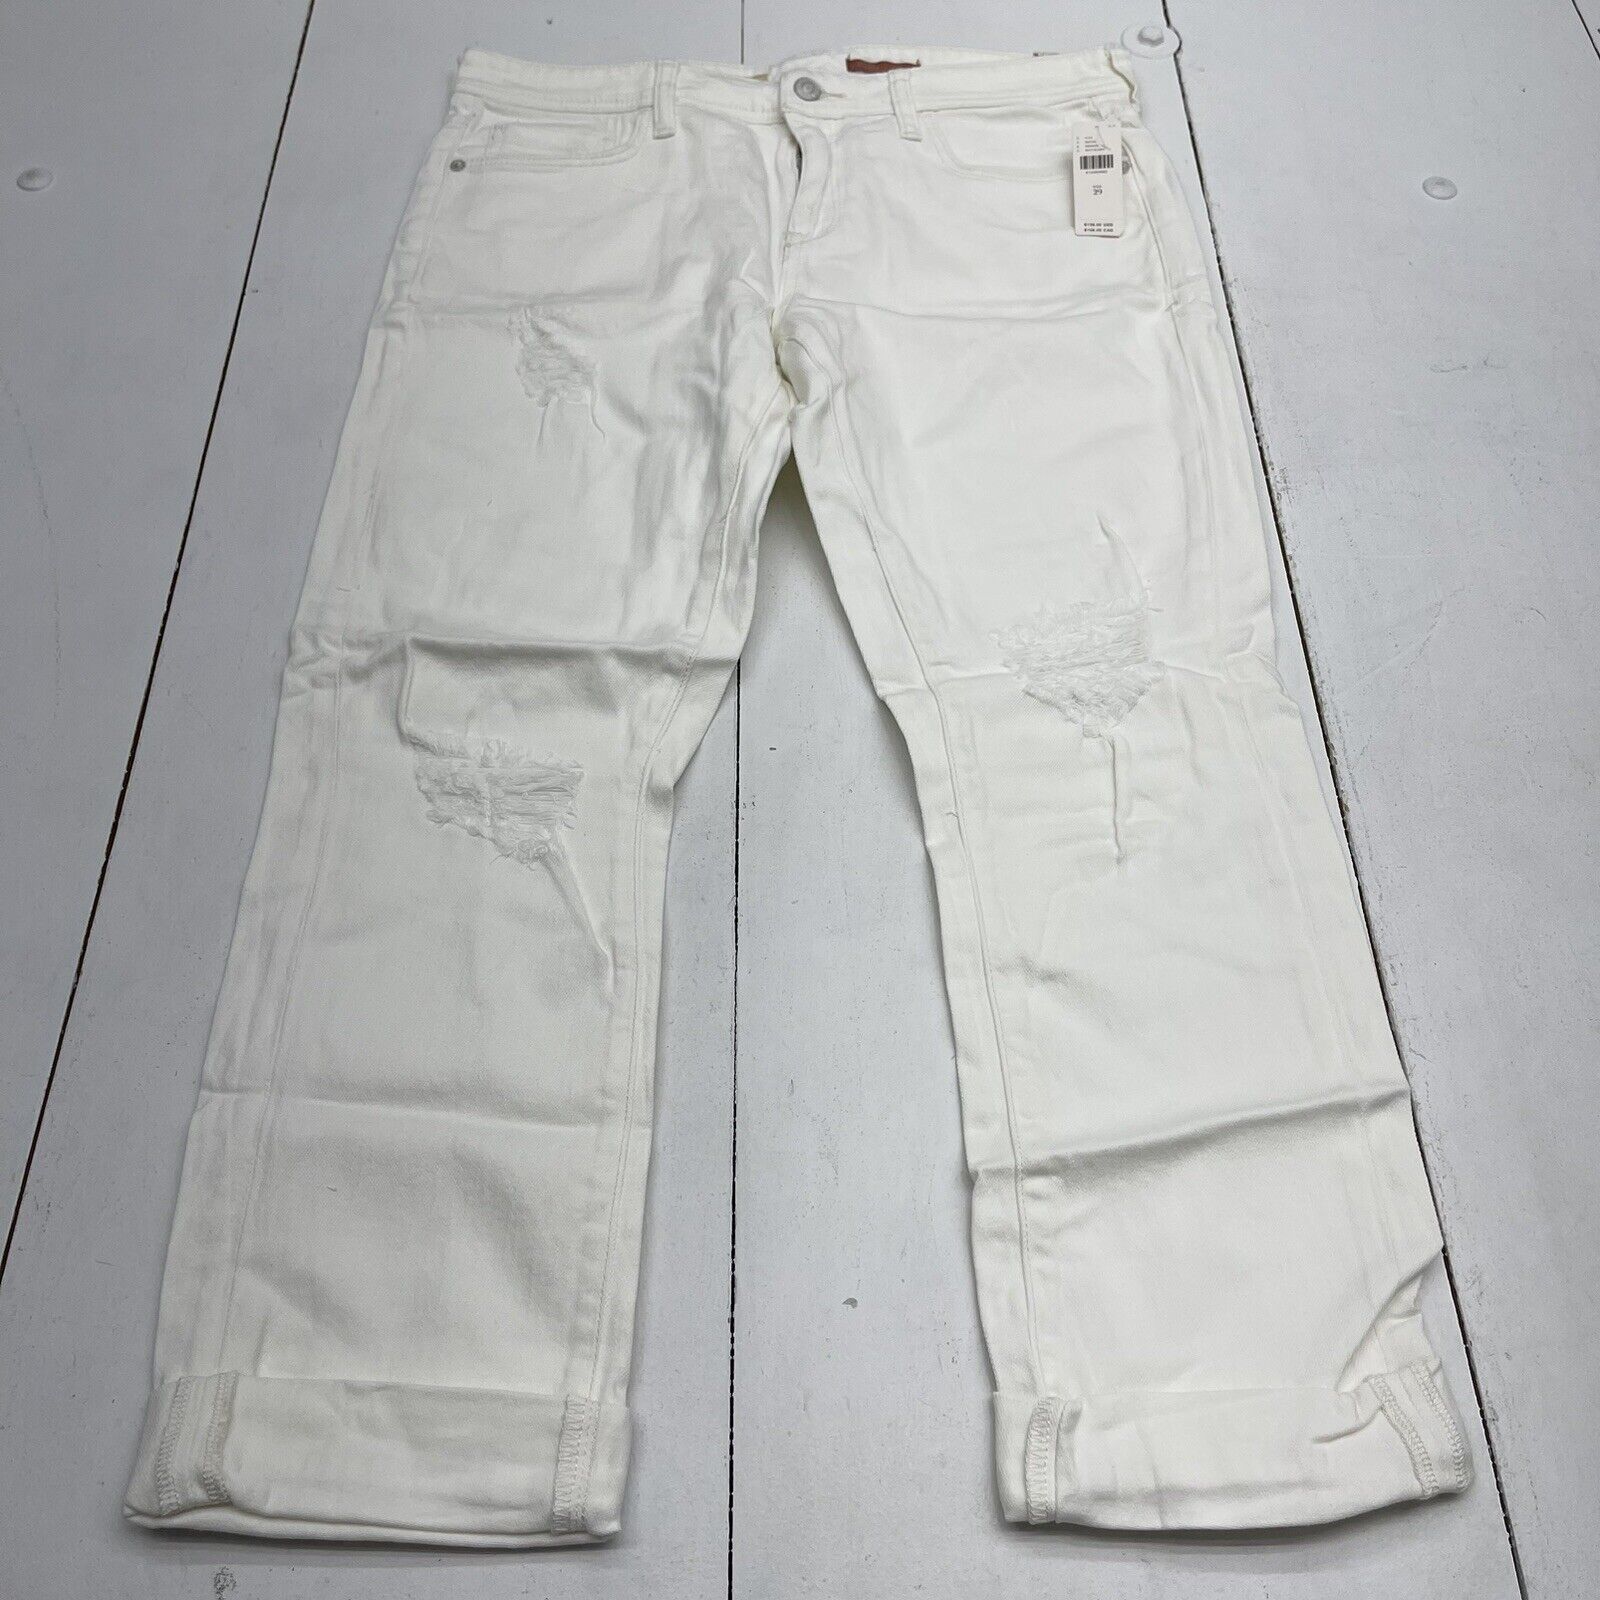 Pilcro White Distressed Slim Boyfriend Crop Jeans Women’s Size 29 New